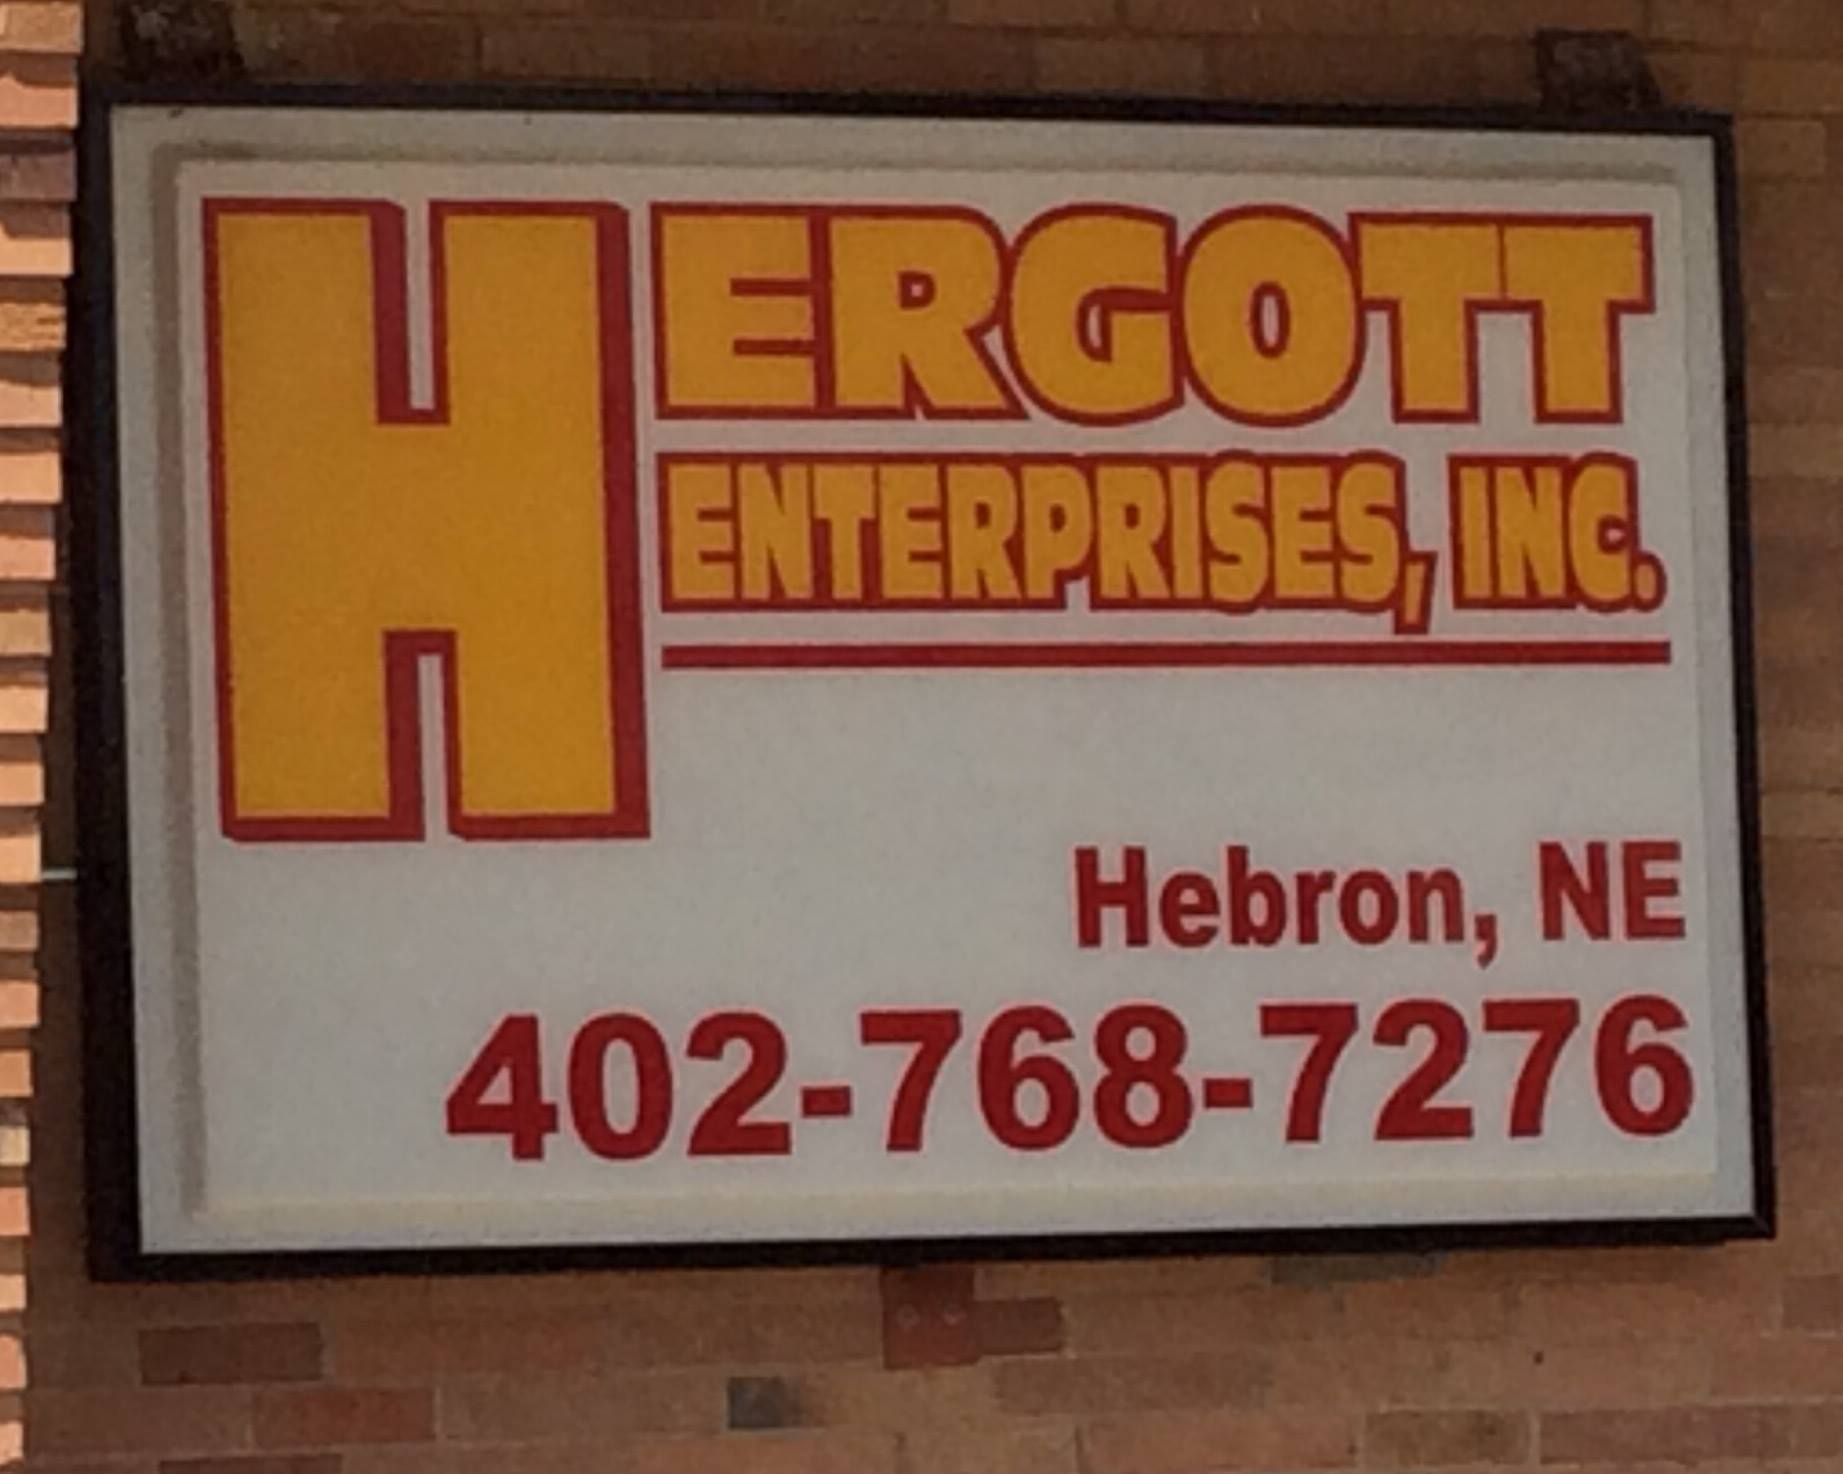 Hergott Enterprises Inc's Image